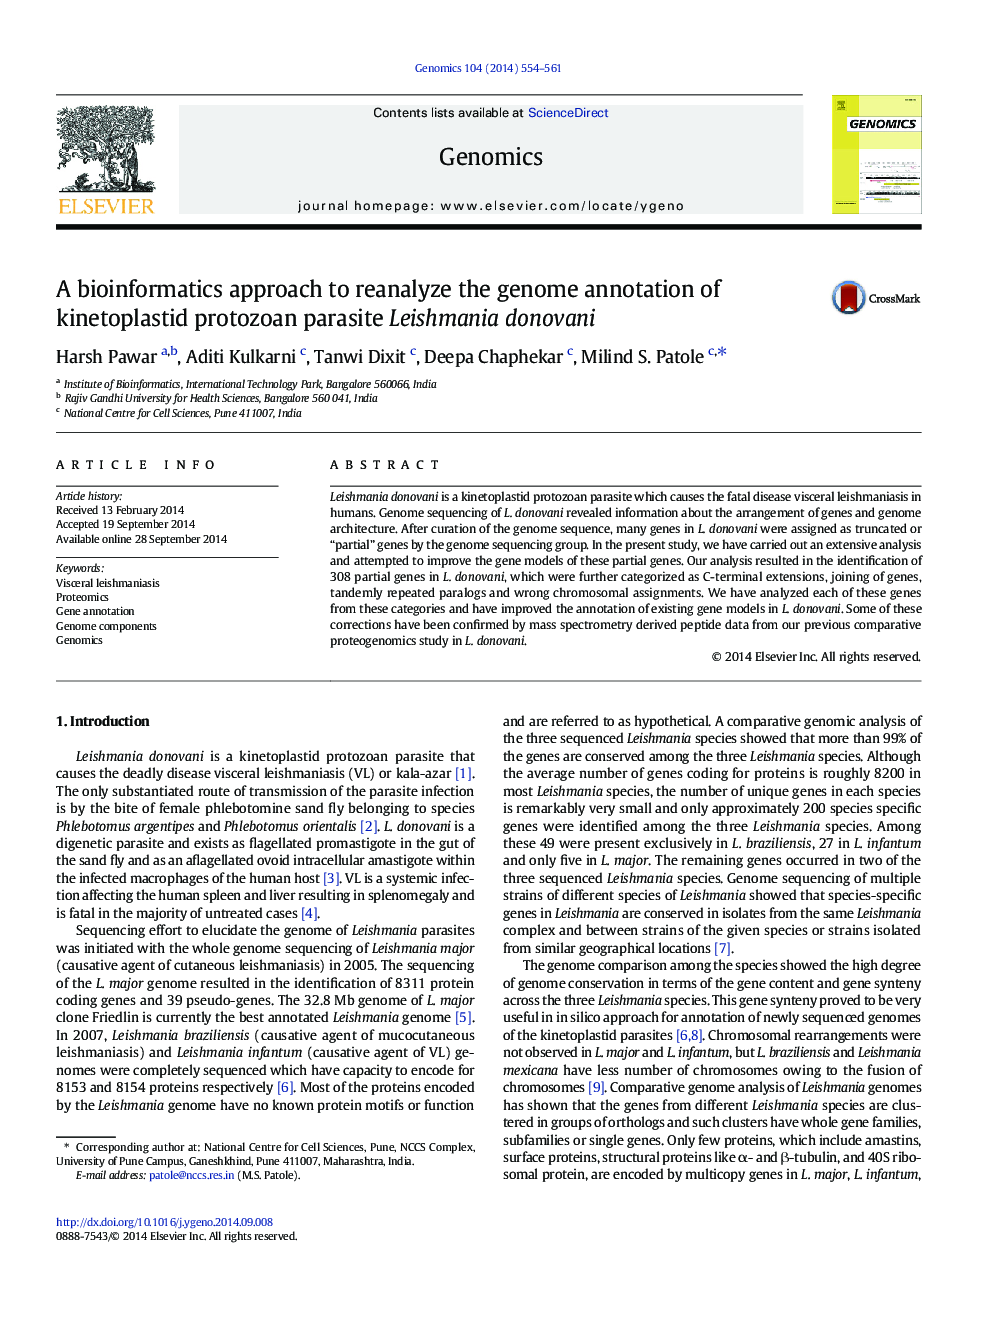 A bioinformatics approach to reanalyze the genome annotation of kinetoplastid protozoan parasite Leishmania donovani